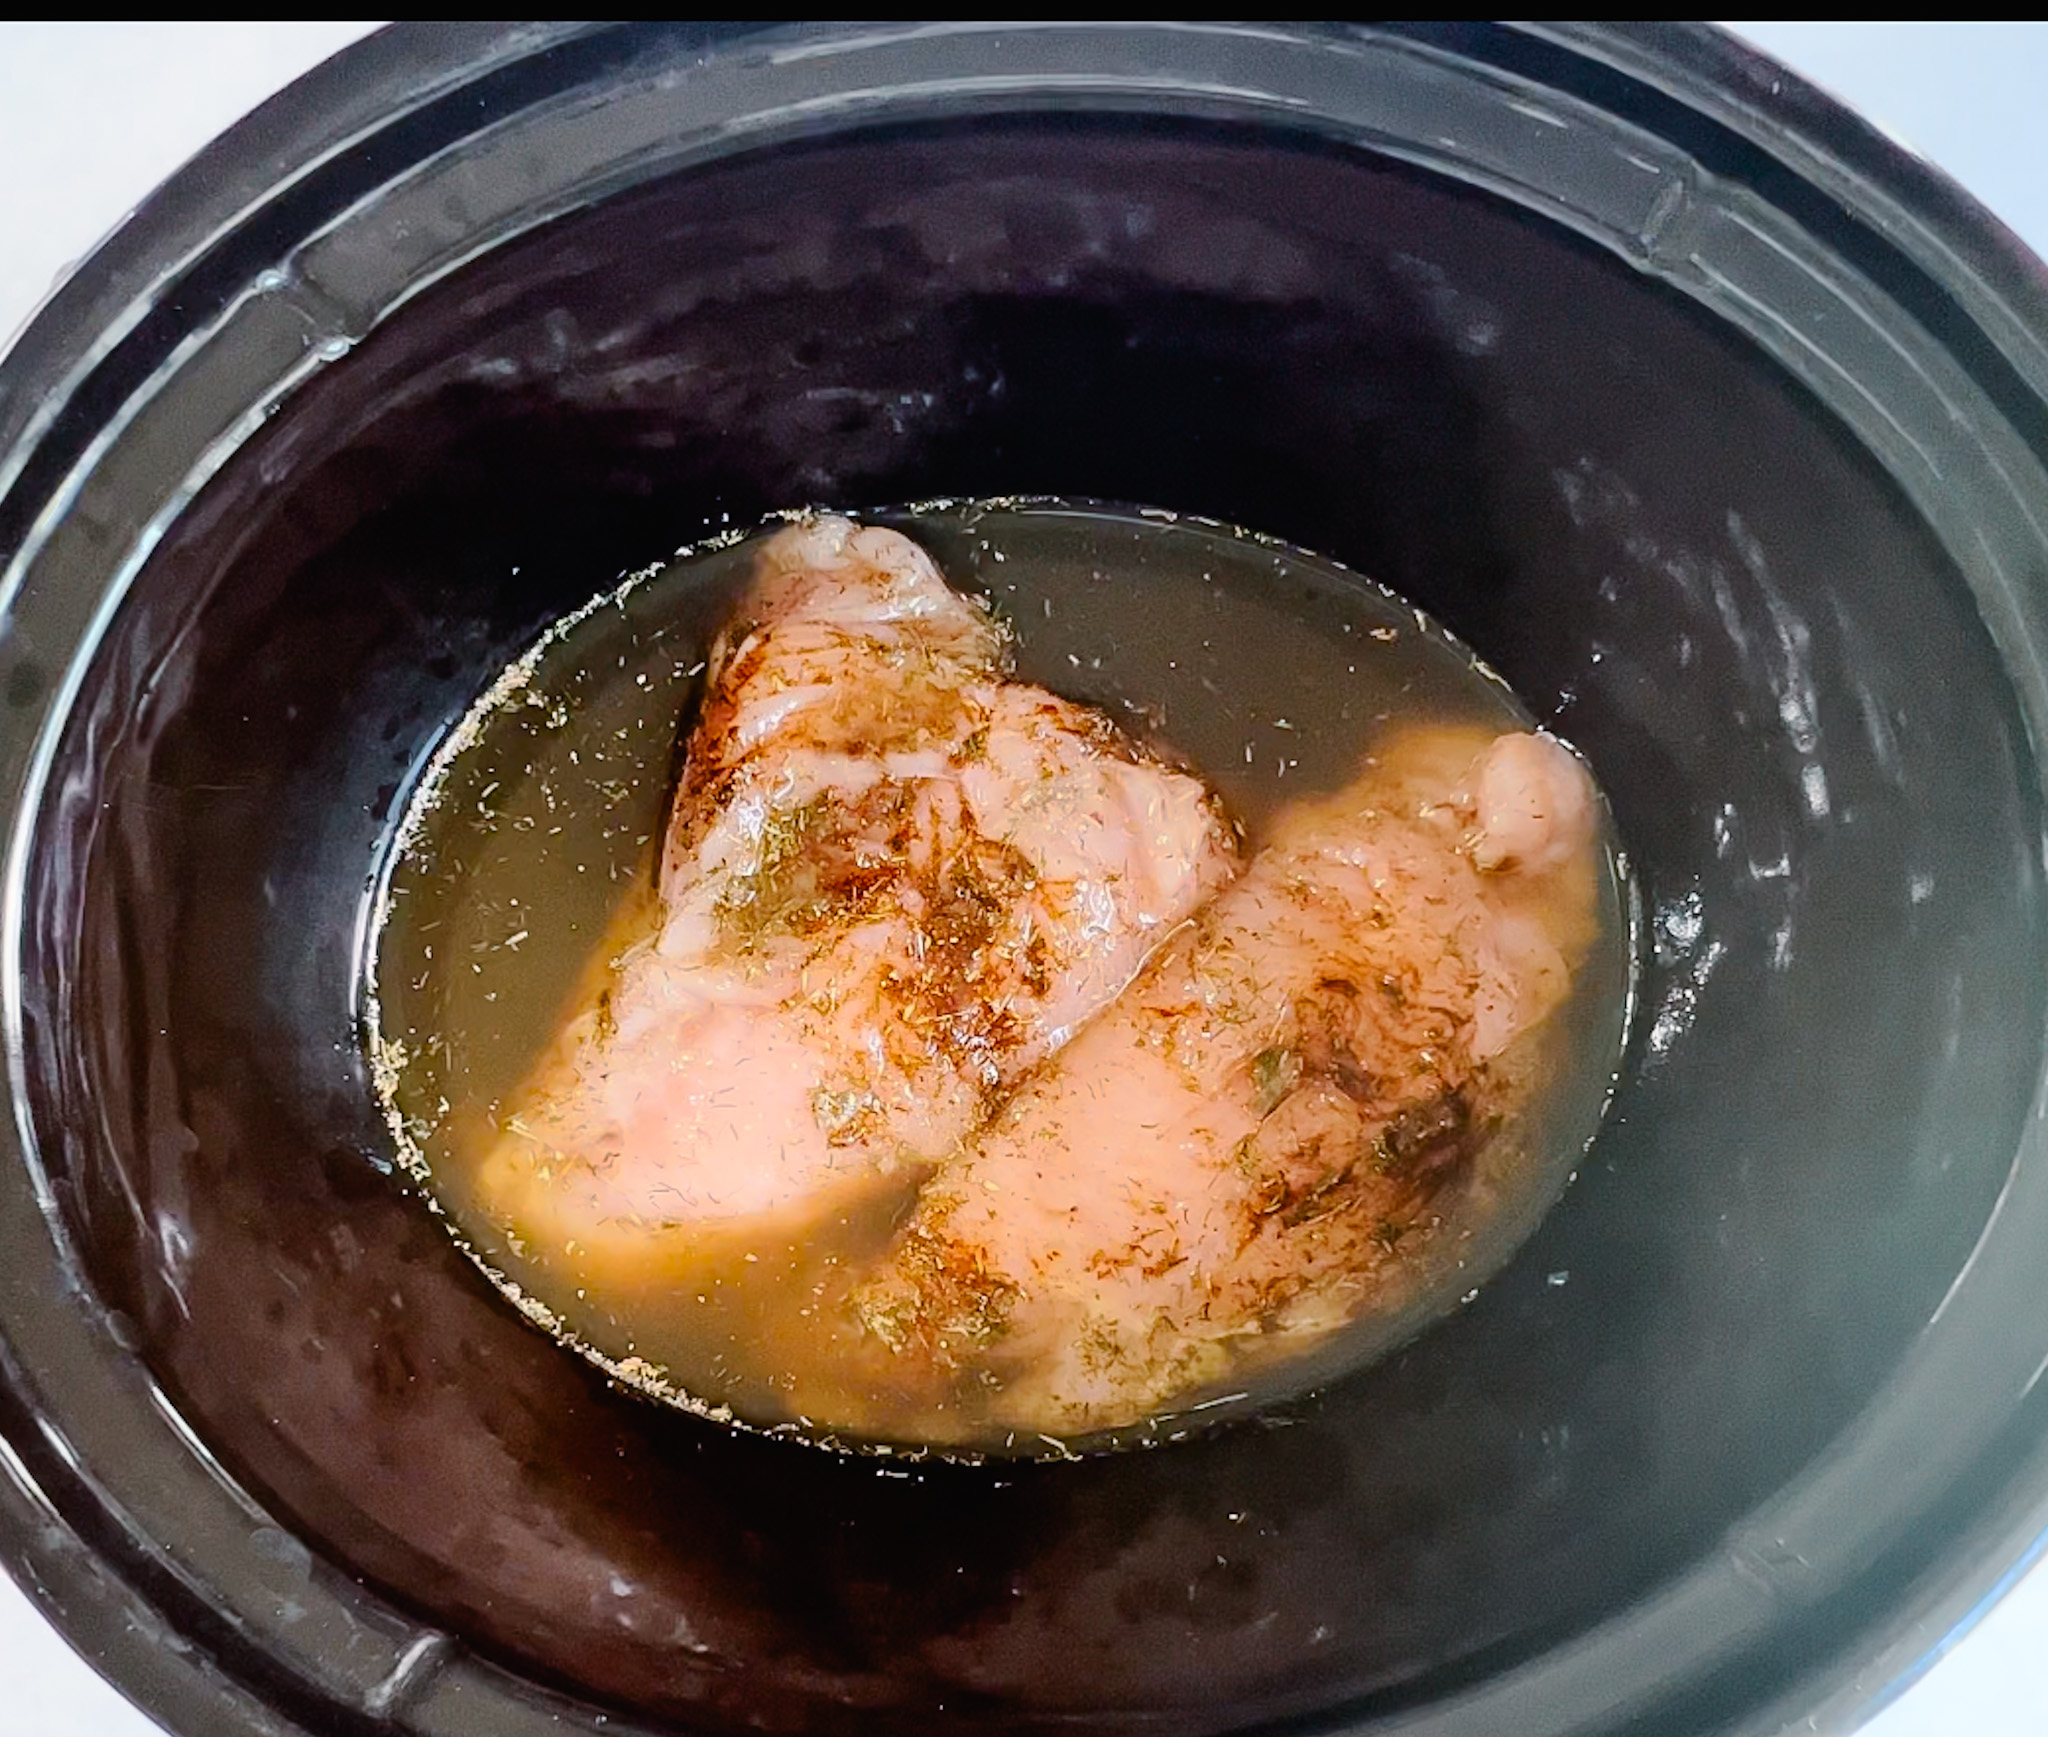 turkey tenderloin in the crockpot with chicken stock